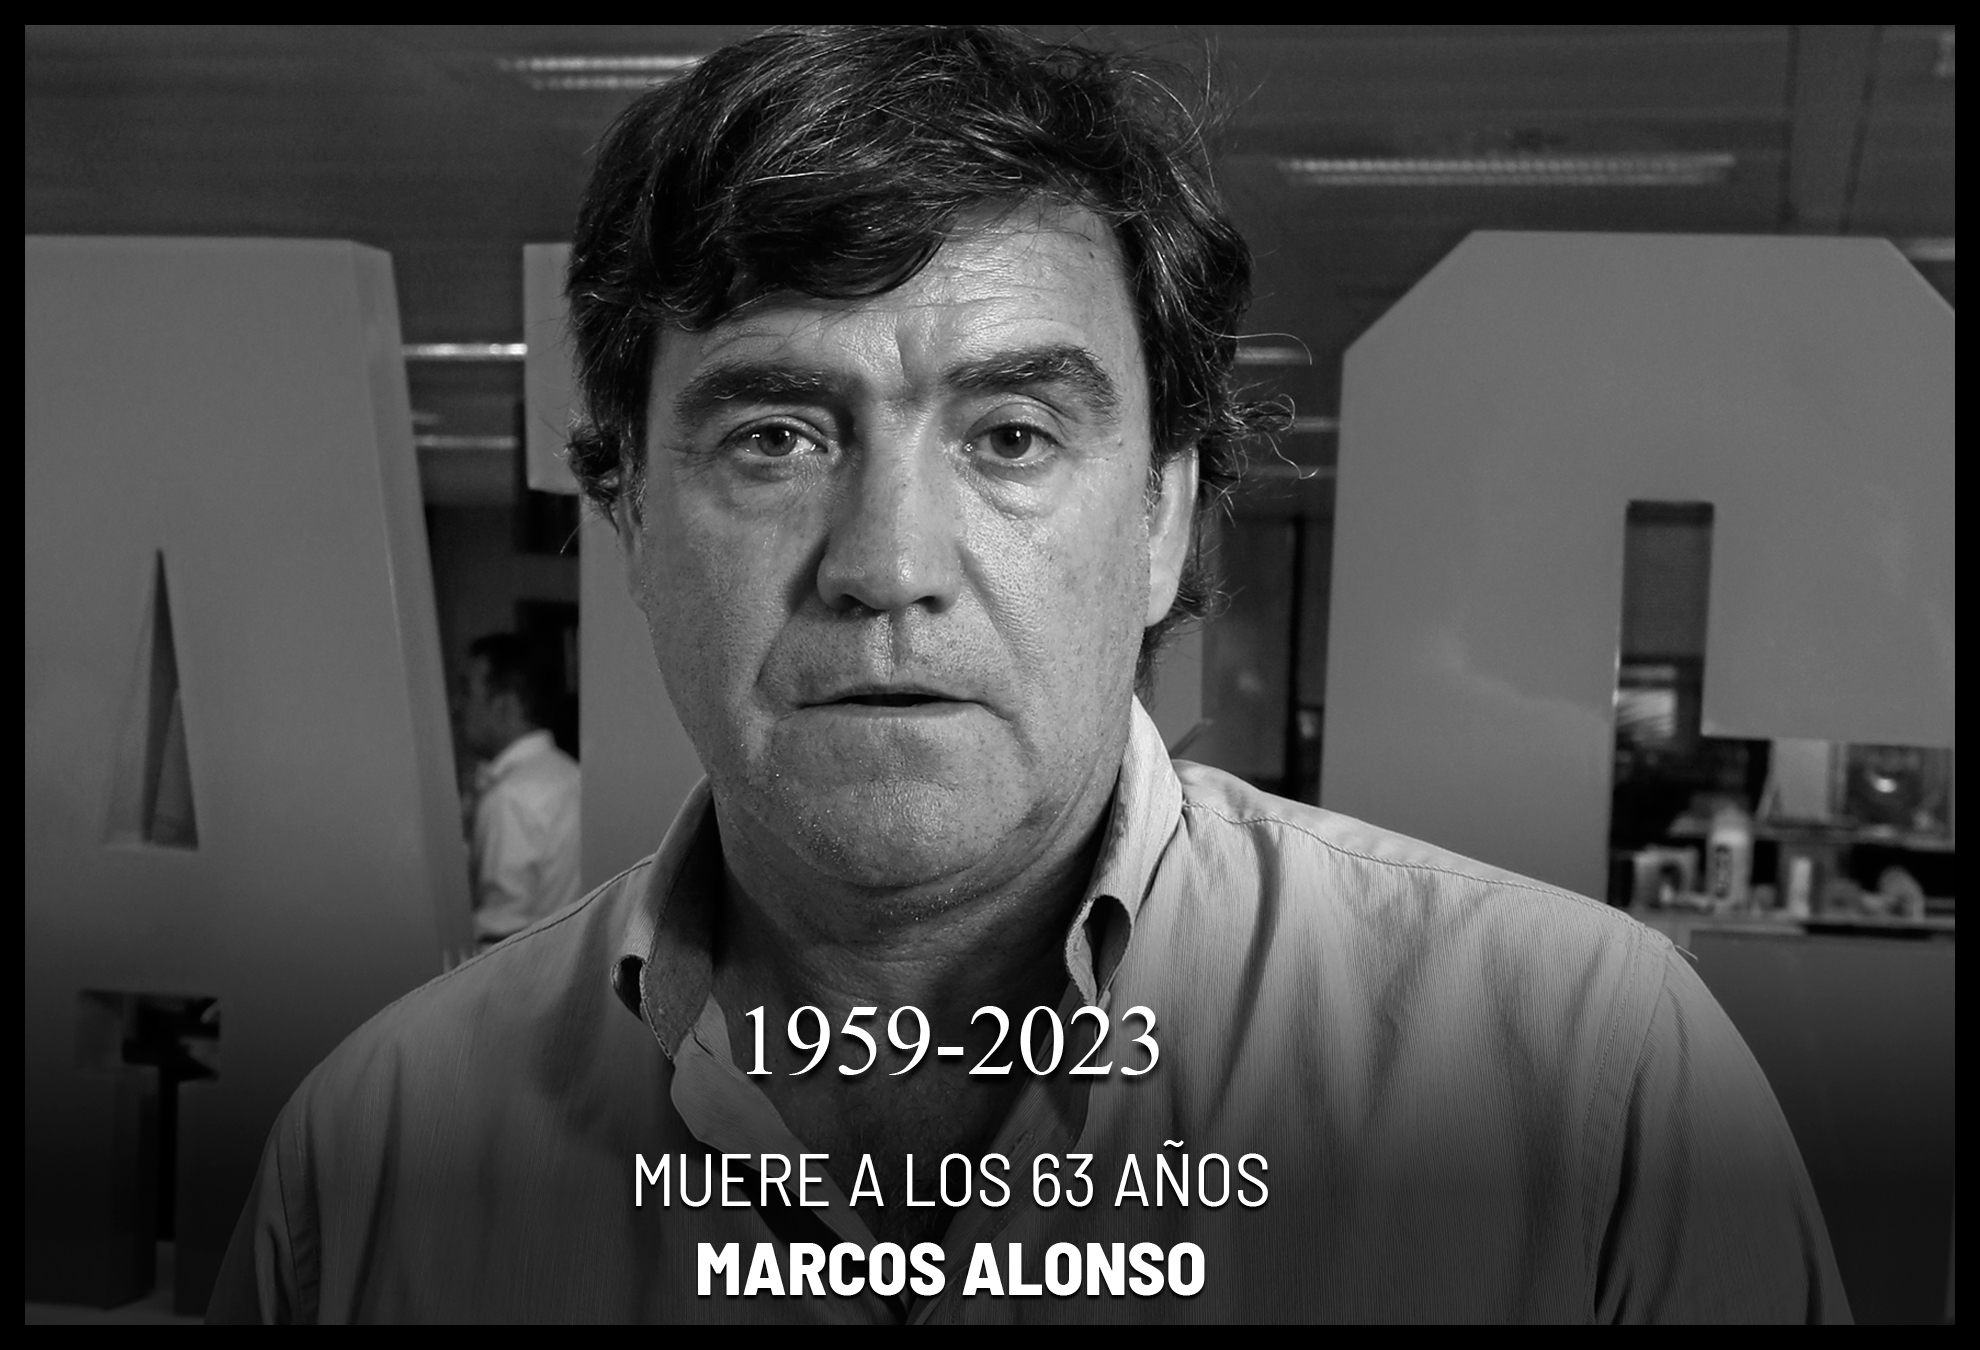 Marcos Alonso Peña (1959-2023).